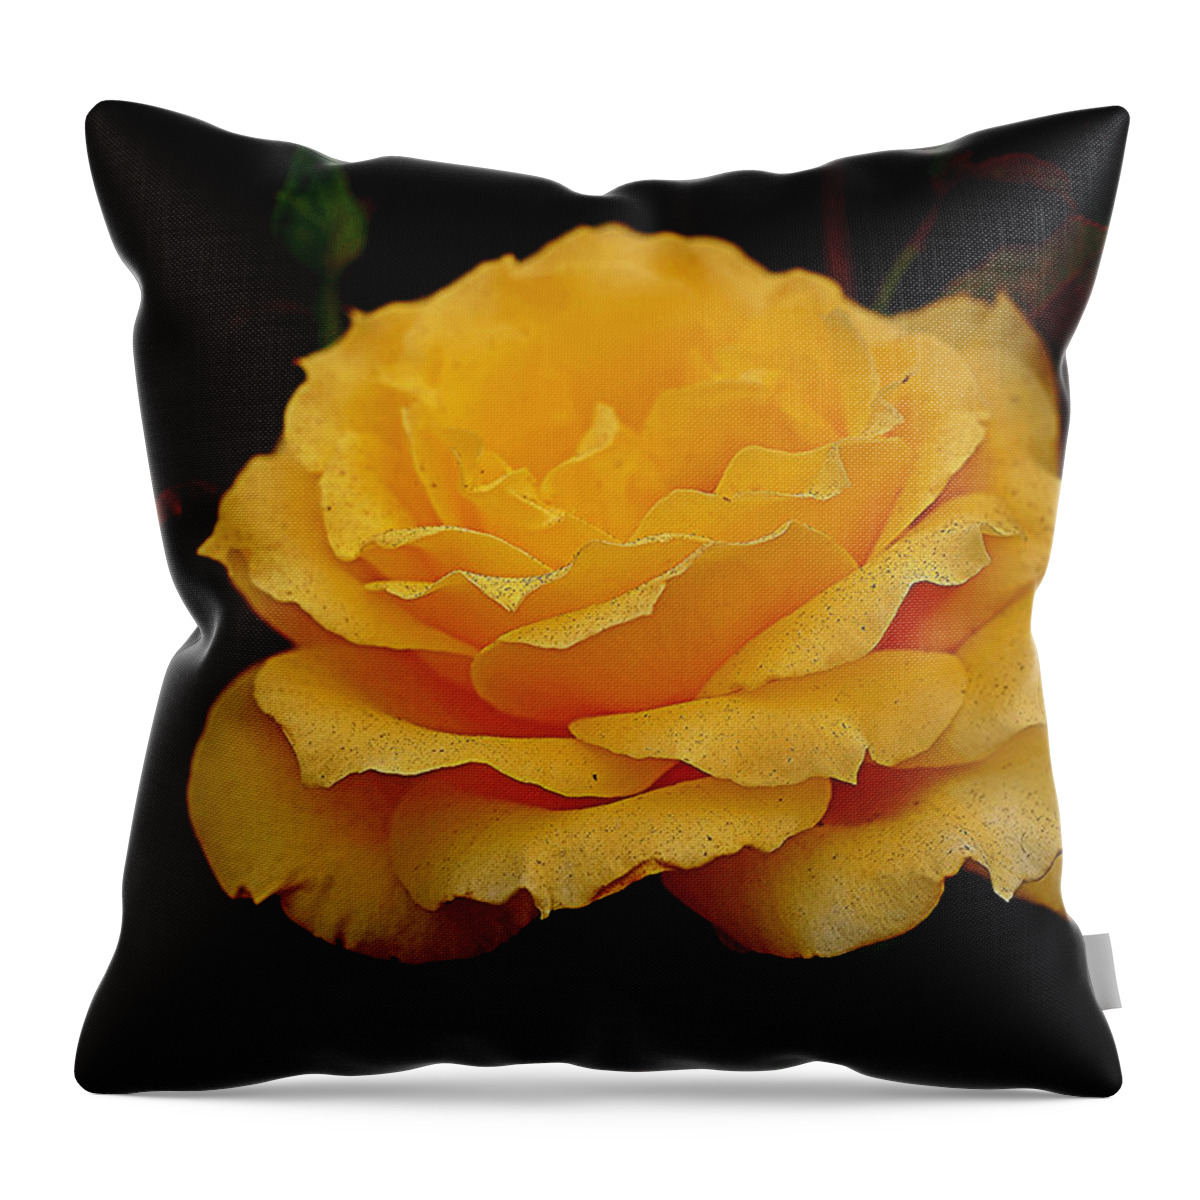 Botanical Throw Pillow featuring the photograph Smokey Yellow Rose by Richard Thomas